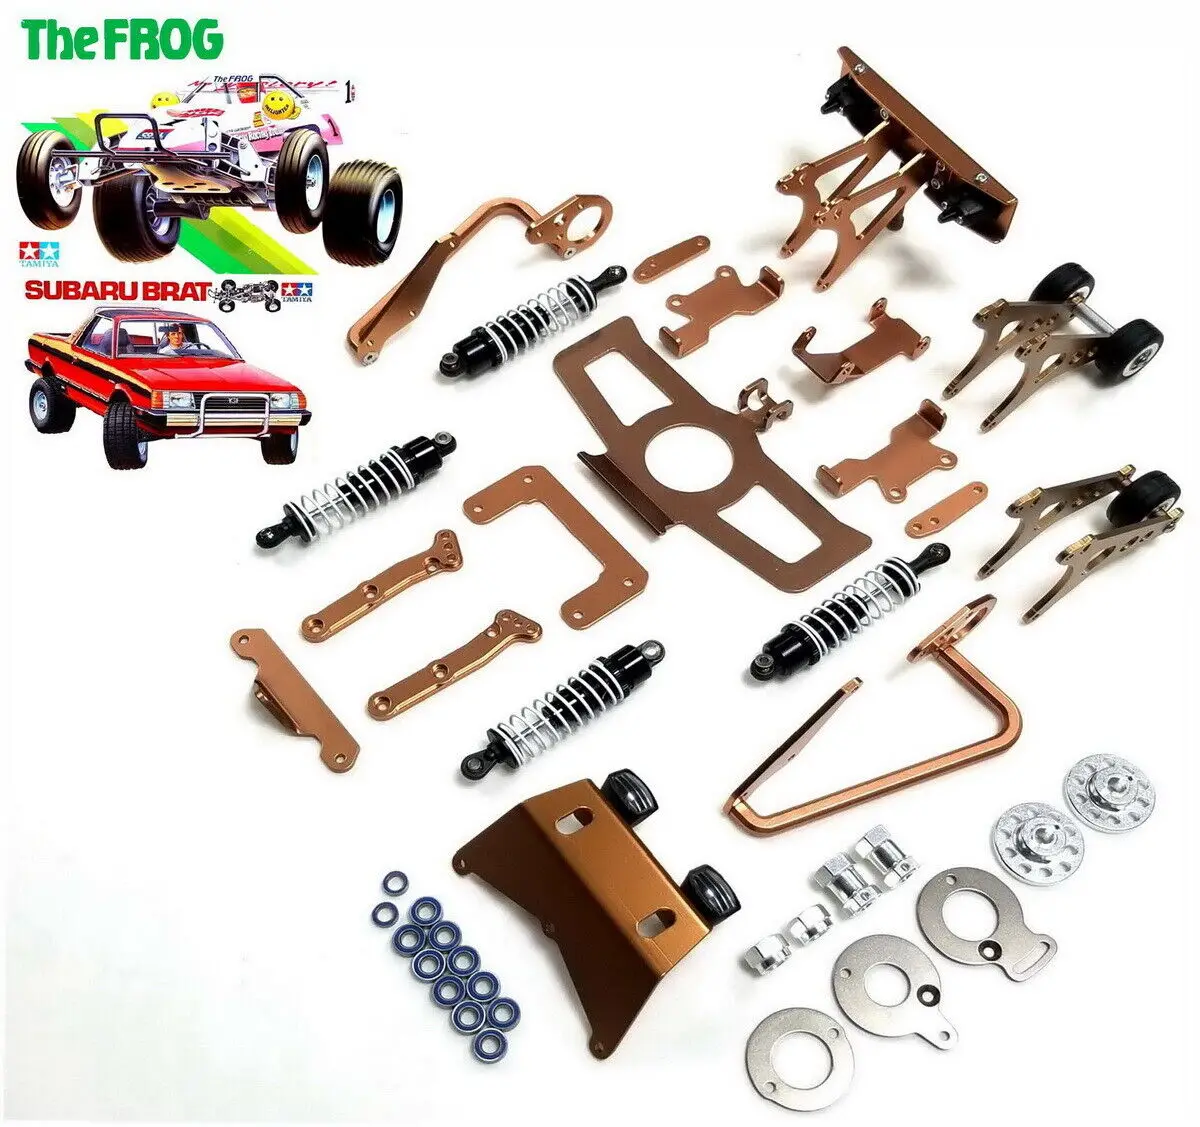 Aluminum Option Parts/Oil Dampers/Bumper for Tamiya Frog/Subaru Brat 2WD RC Car Upgrade